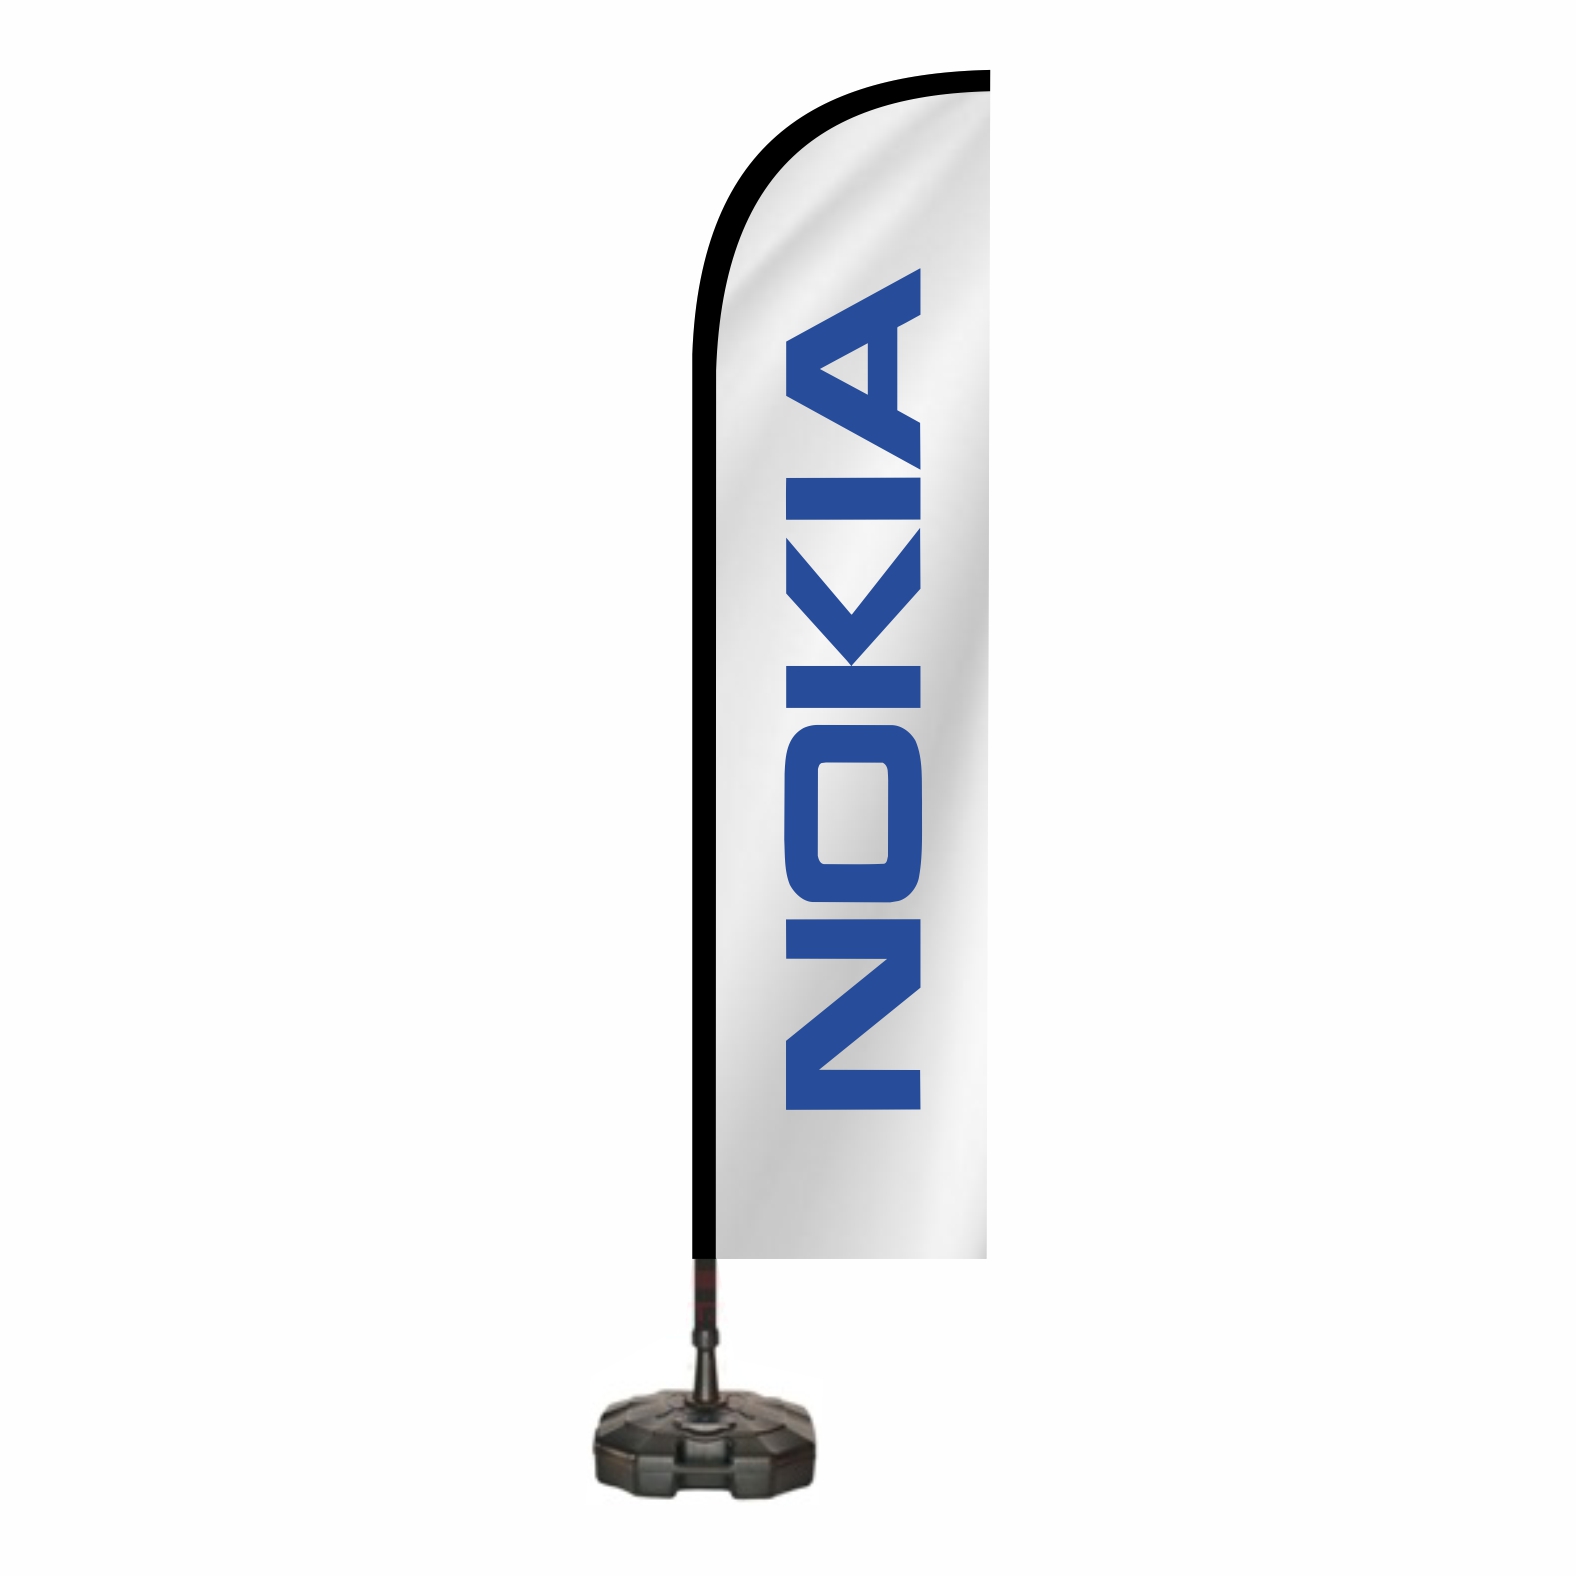 Nokia Cadde Bayraklar